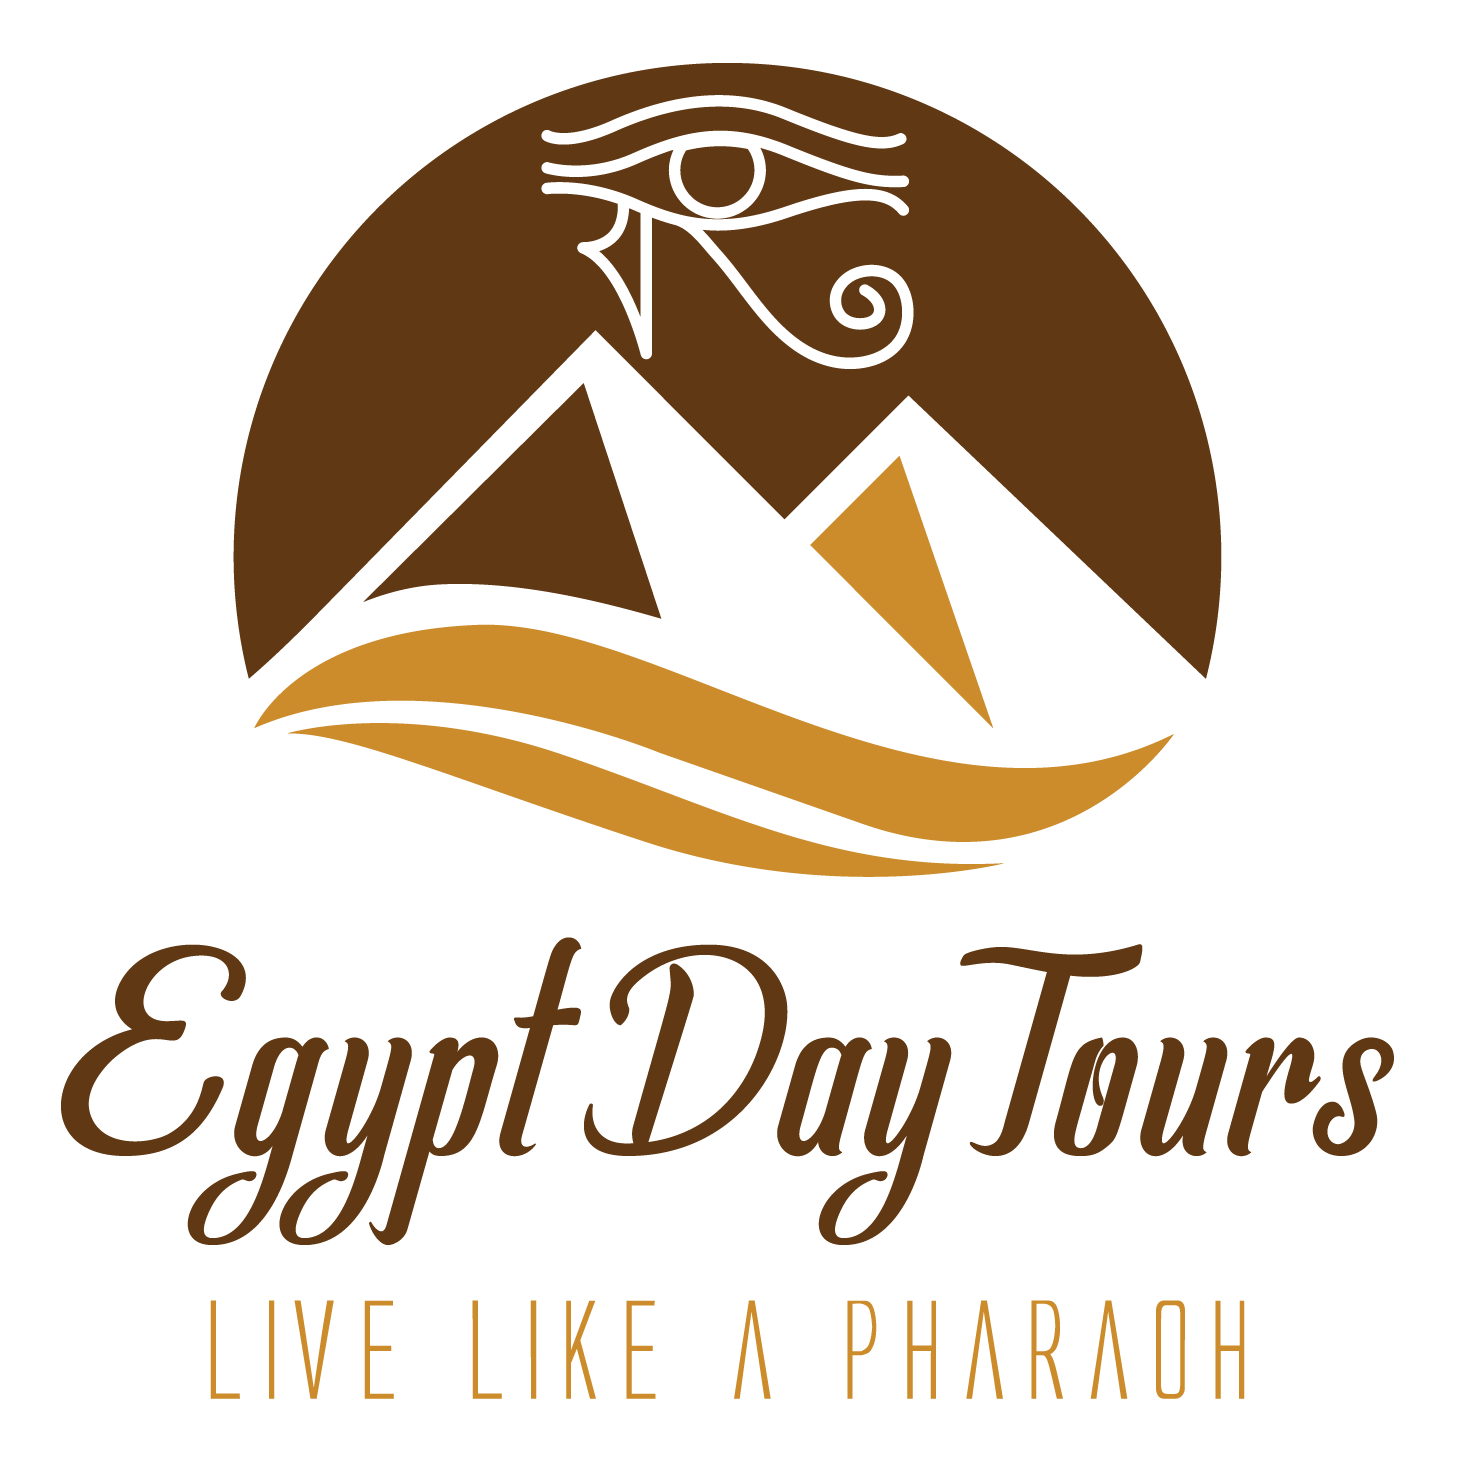 Egypt Day Tours | Egypt and Jordan travel package, Holiday to Jordan and Egypt, Jordan sightseeing trips